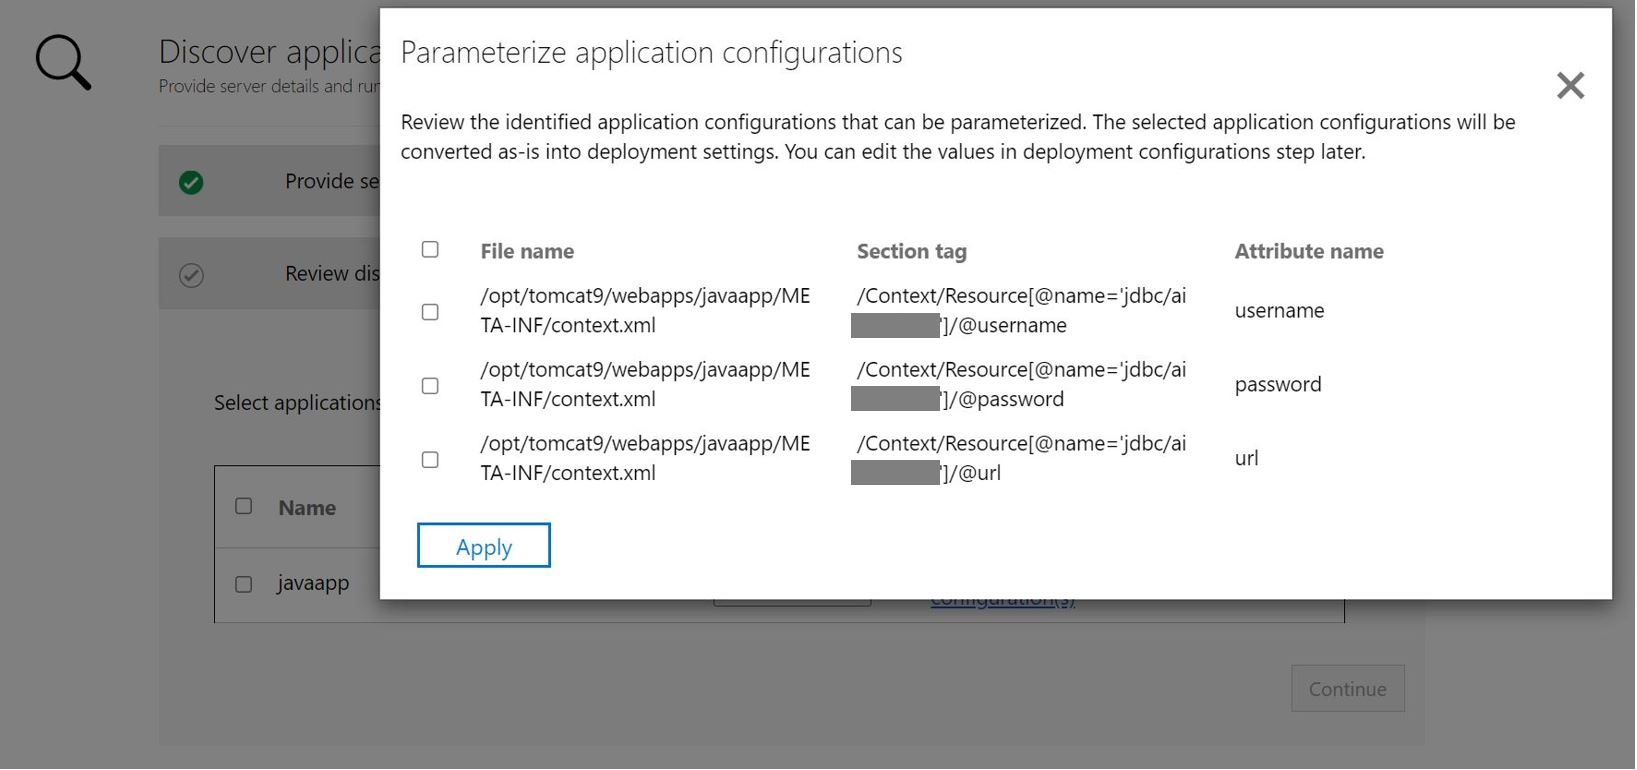 Screenshot for app configuration parameterization Java application.